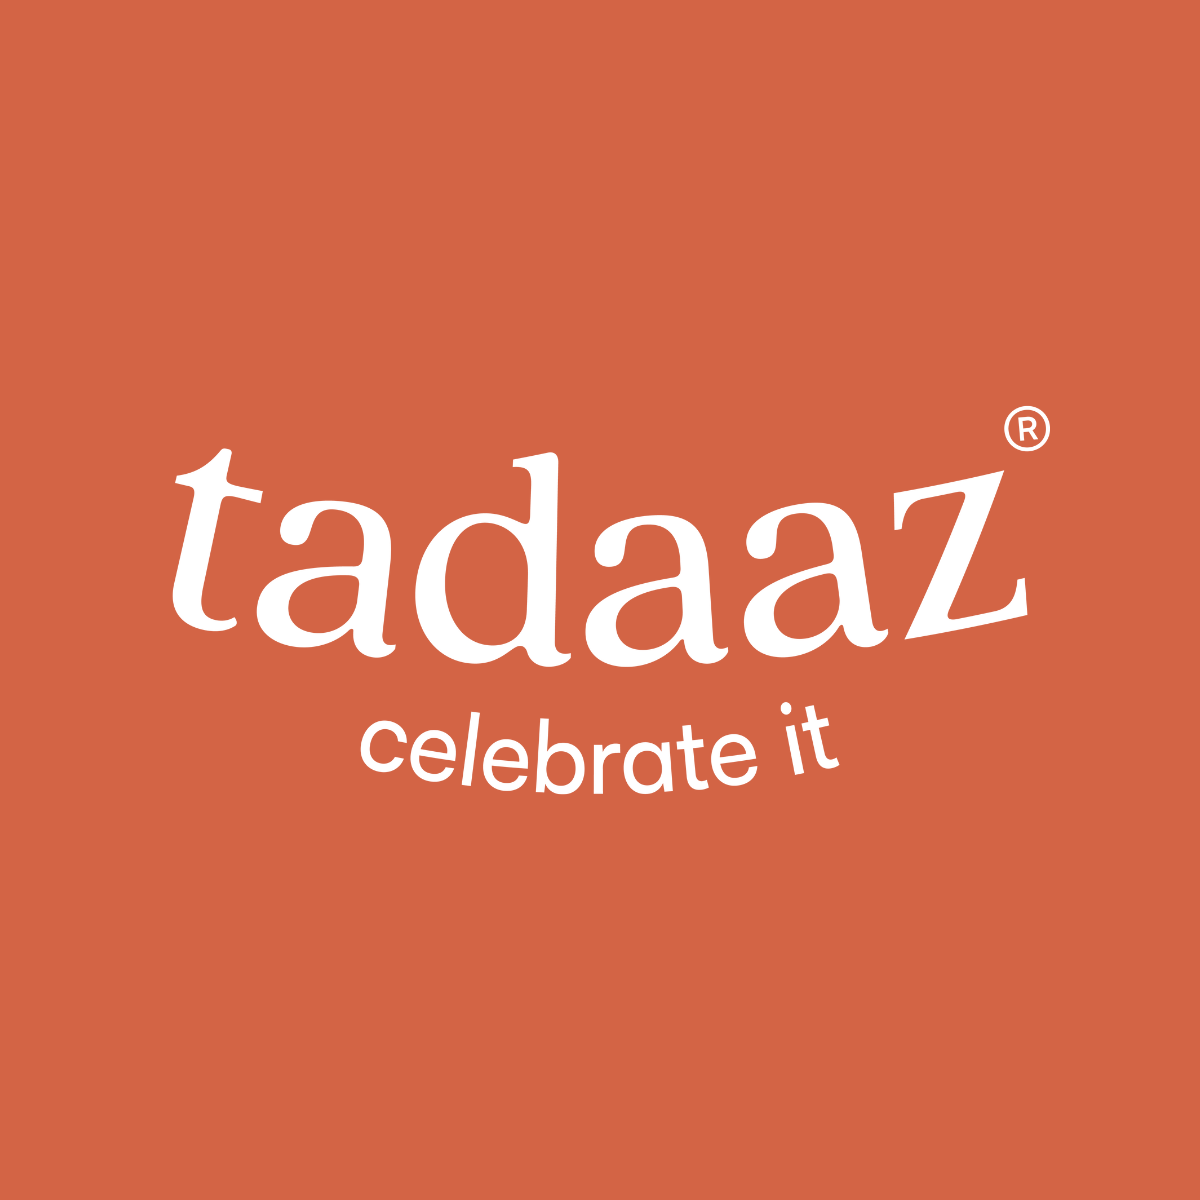 Tadaaz, Celebrate it.